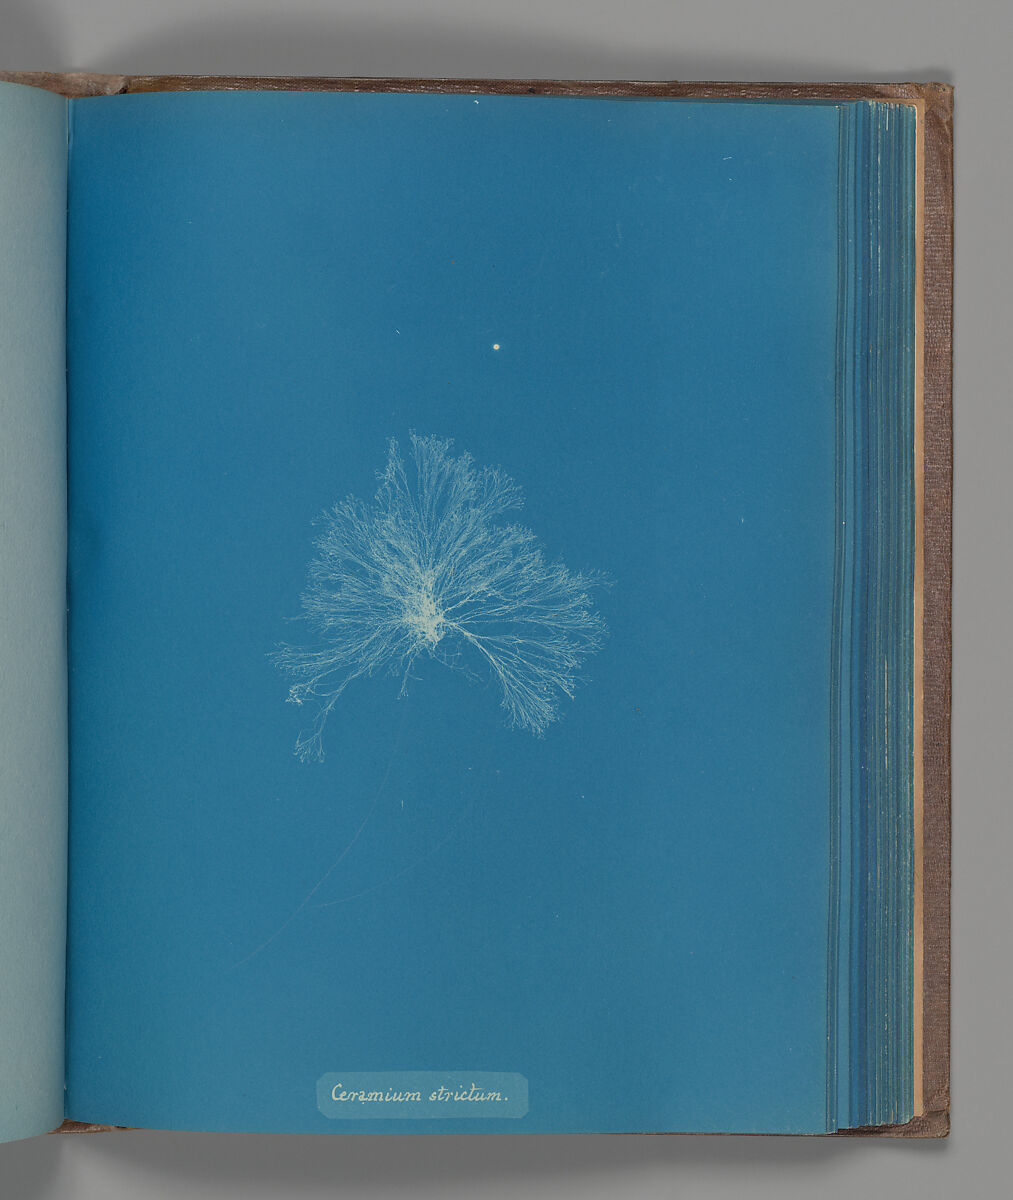 Ceramium strictum, Anna Atkins (British, 1799–1871), Cyanotype 